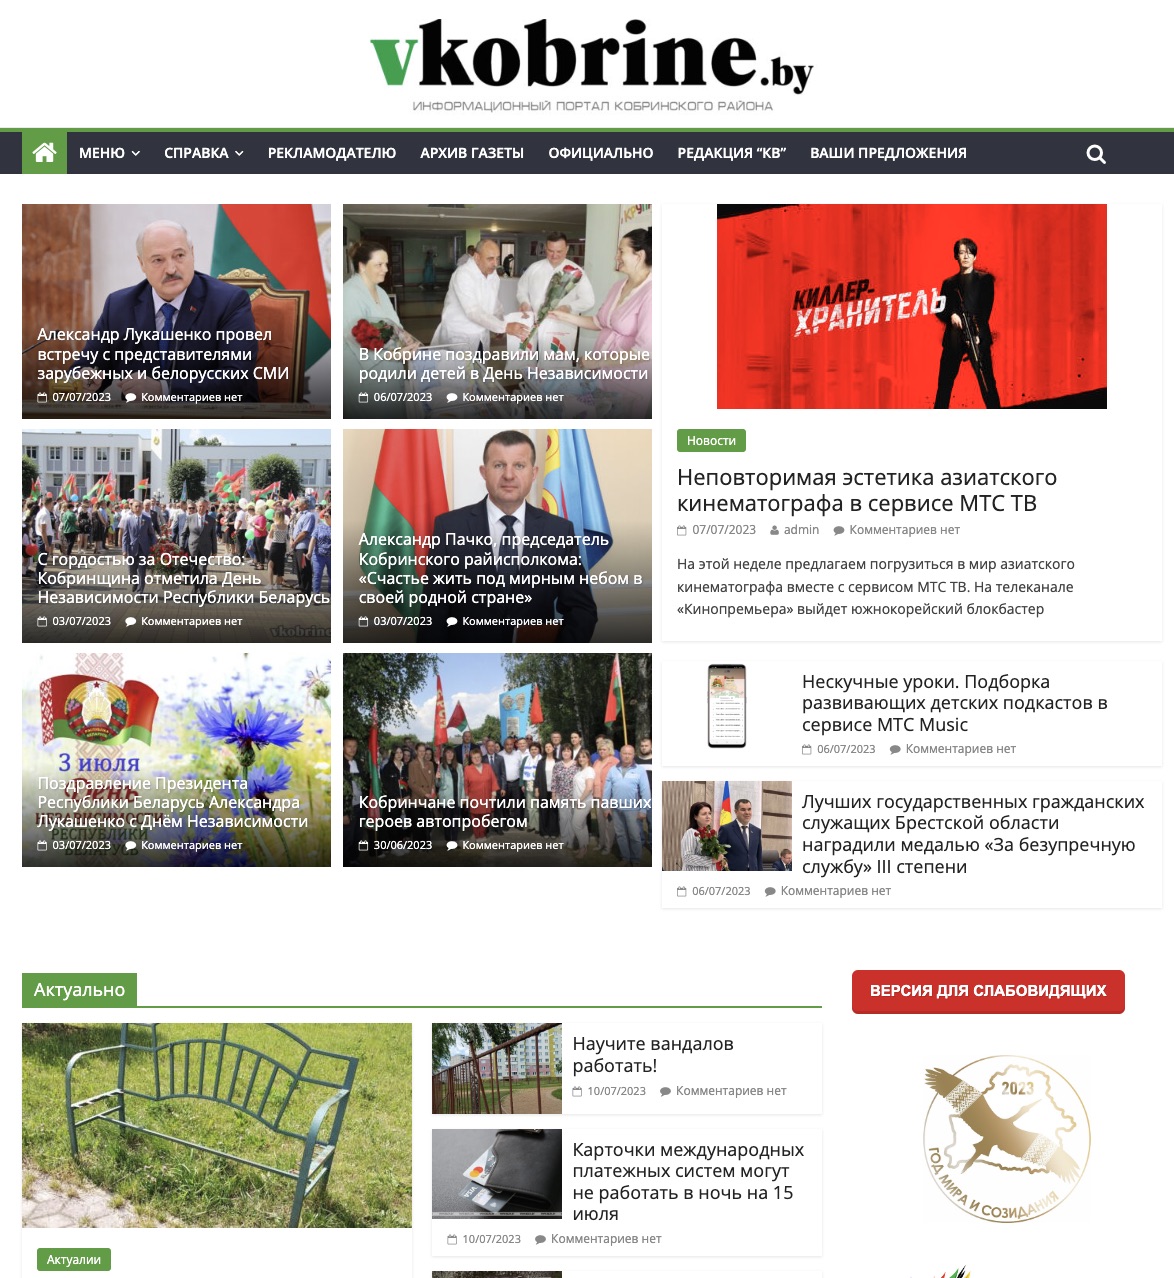 Главная страница сайта кобринской районной газеты «Кобрынскi веснiк»‎. Фото: vkobrine.by.